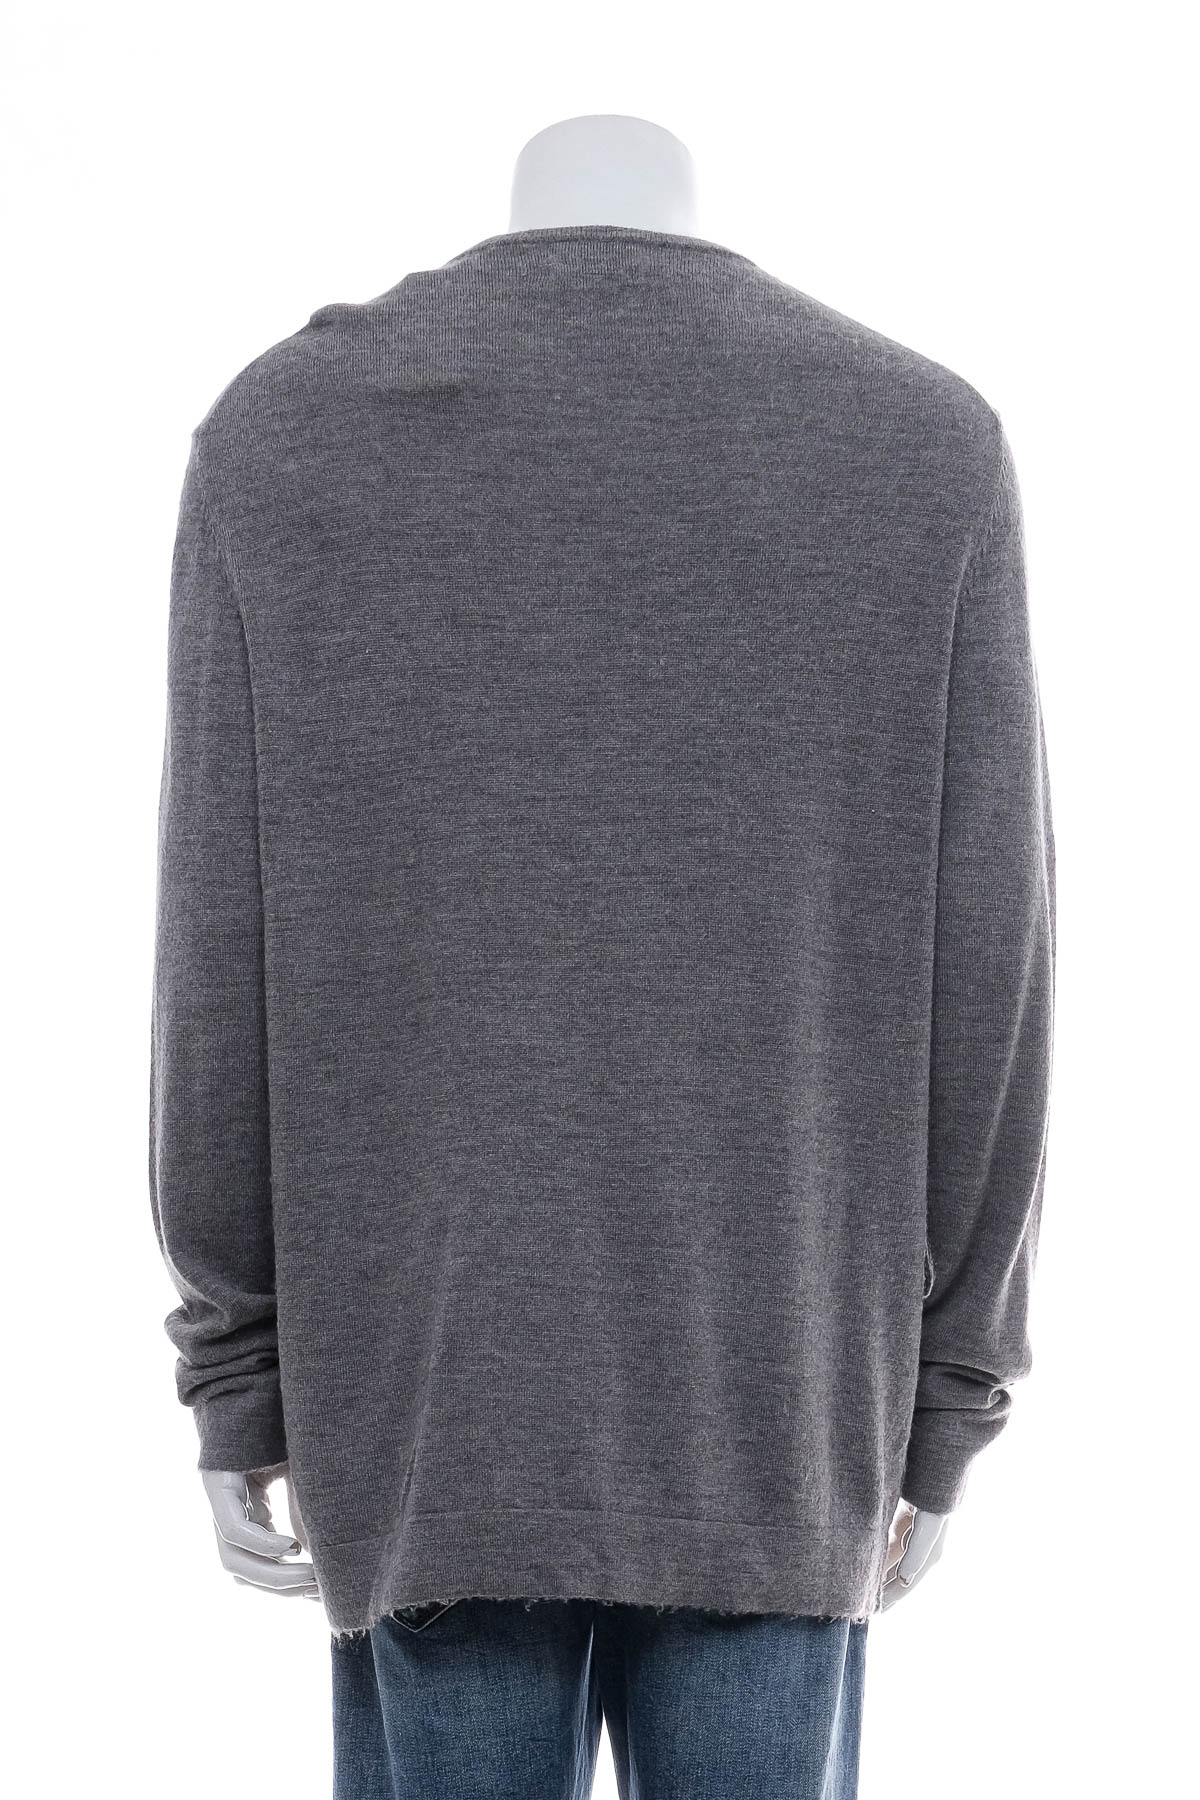 Men's sweater - Calvin Klein - 1